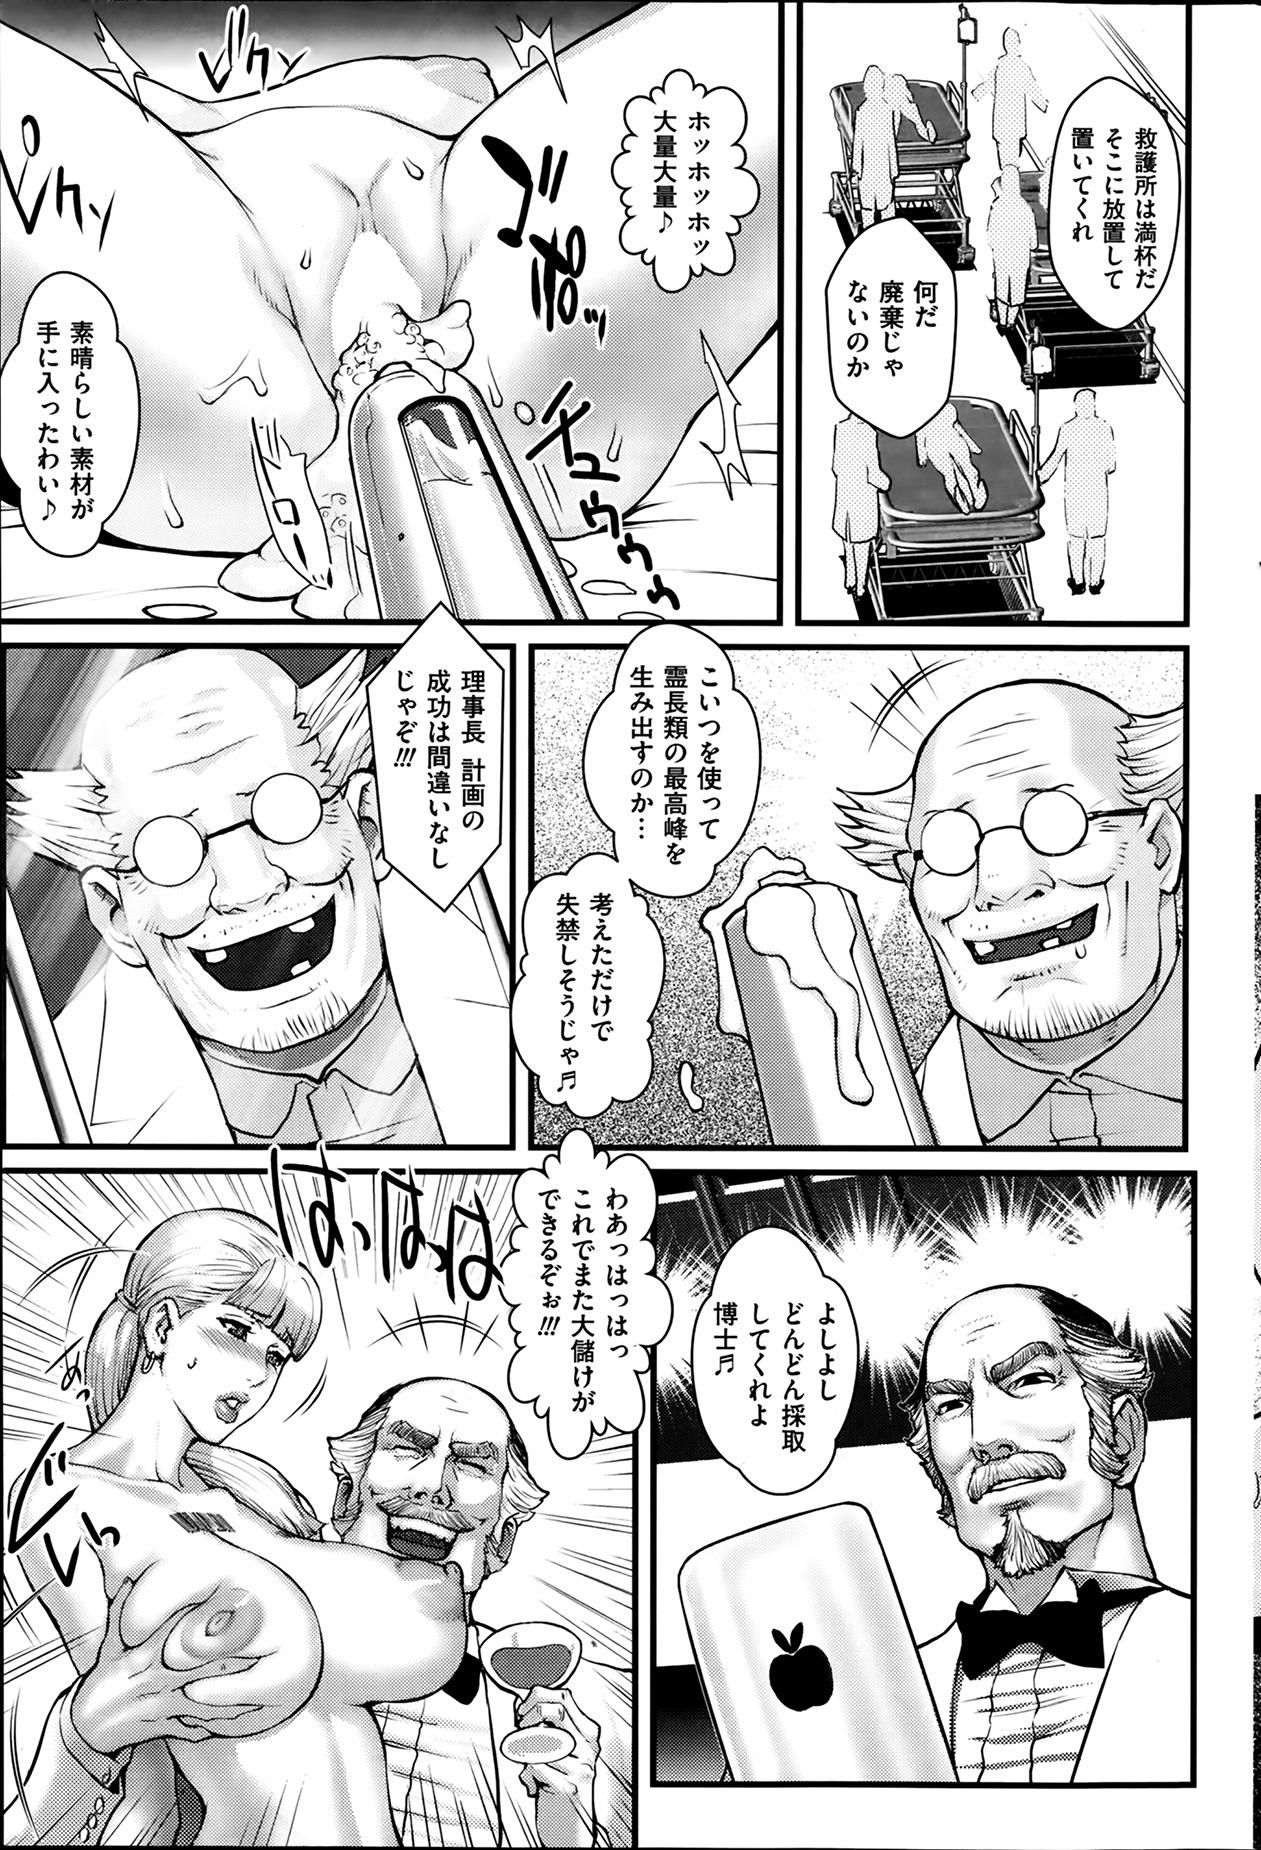 Topless Shiiku byoto 24 Chap 1-5 + Bangai Hen Job - Page 83